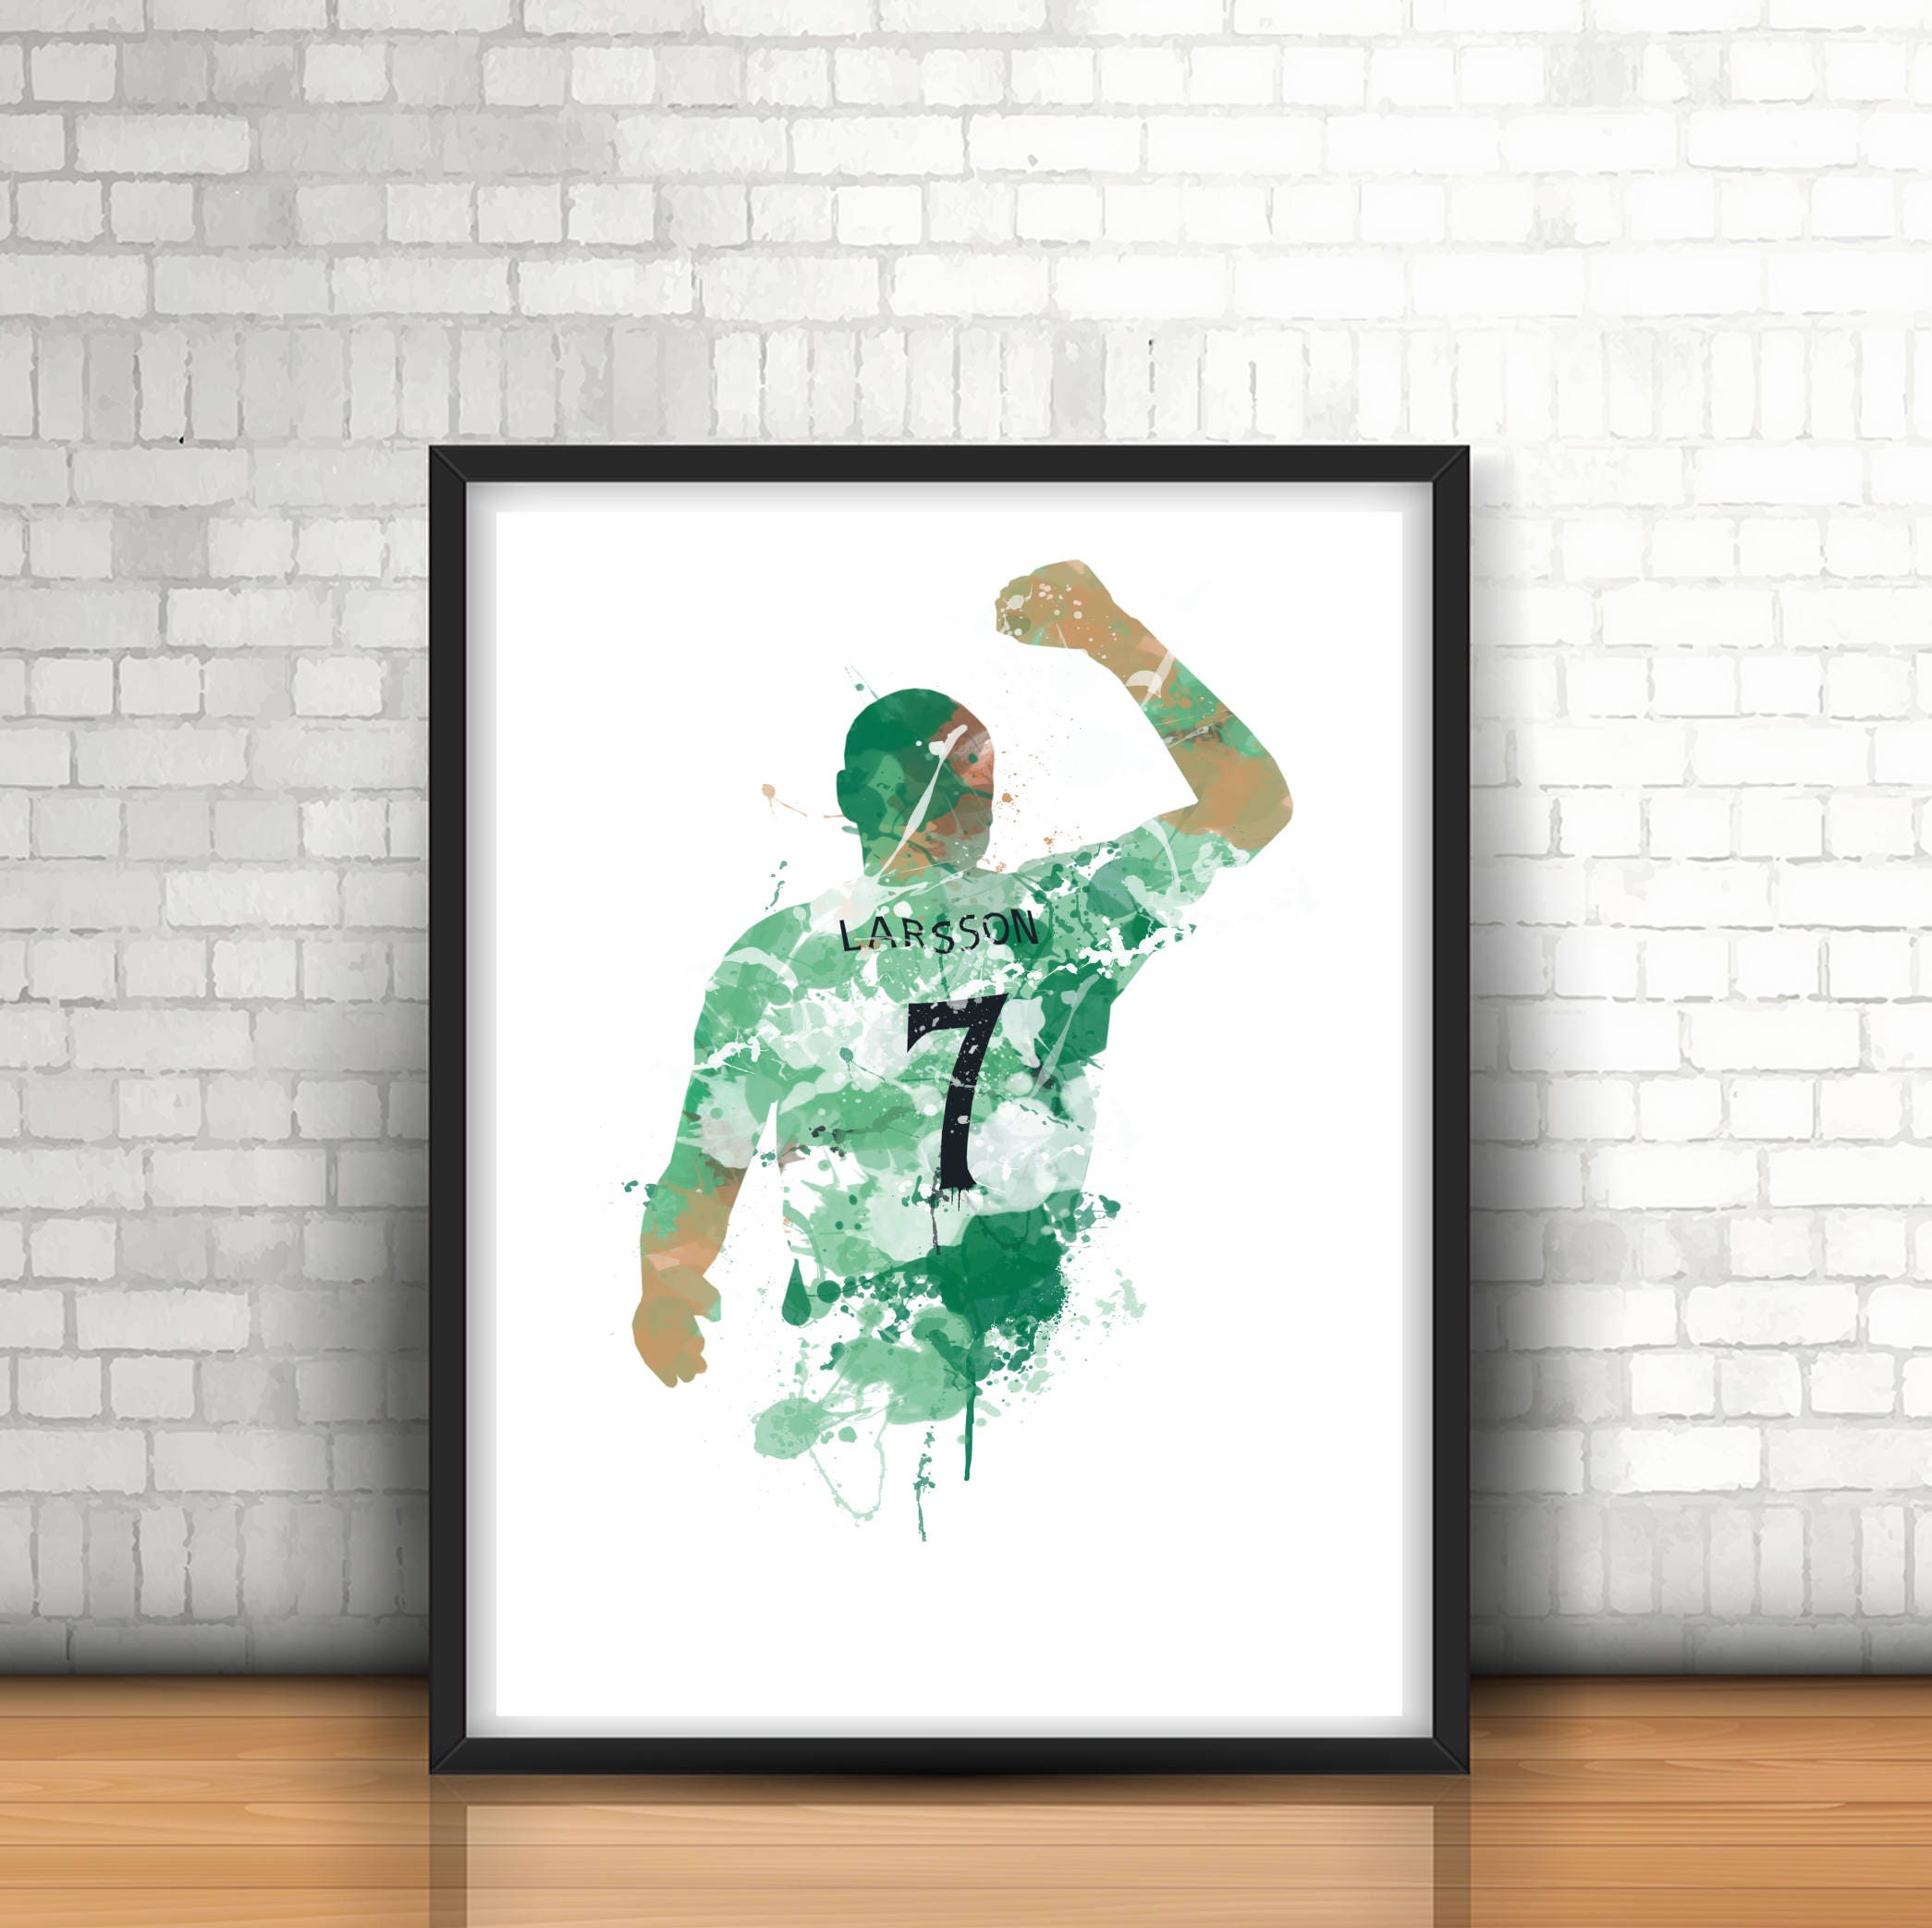 Celtic FC Henrik Larsson - Lenny18 - Digital Art, Sports & Hobbies, Soccer  - ArtPal